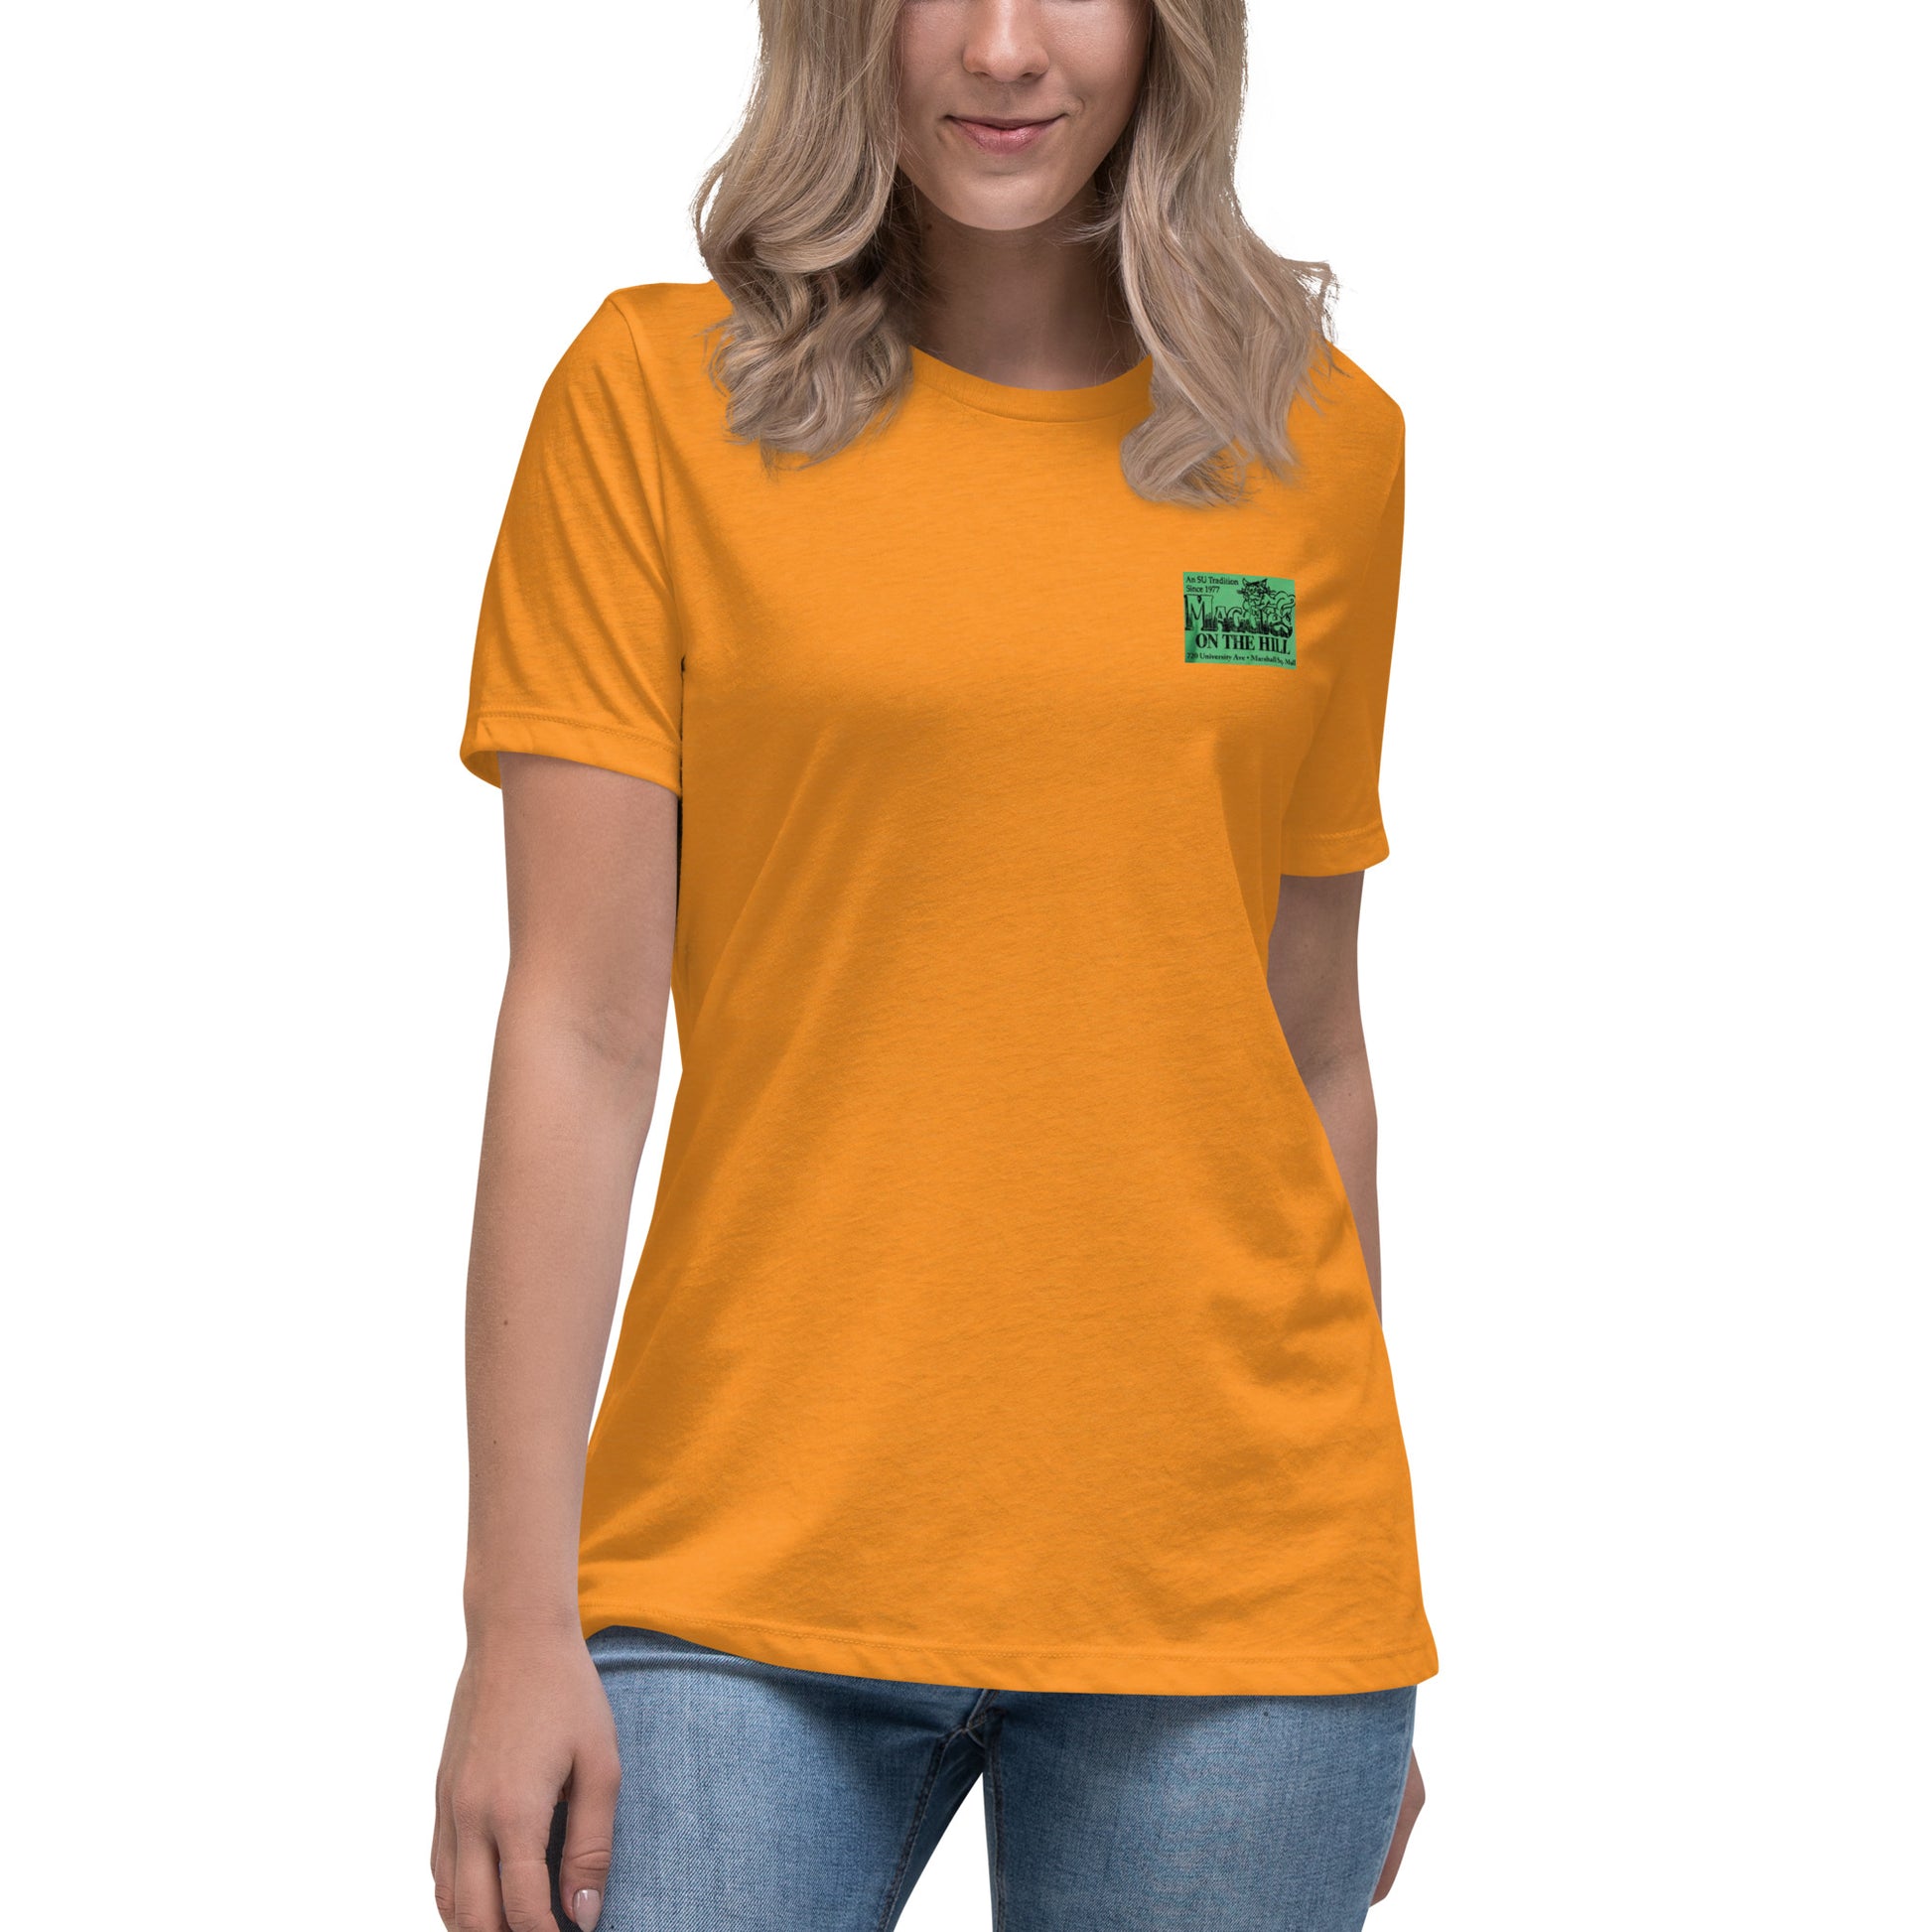 Women's marmalade-orange color crew neck graphic tee shirt with college bar logo